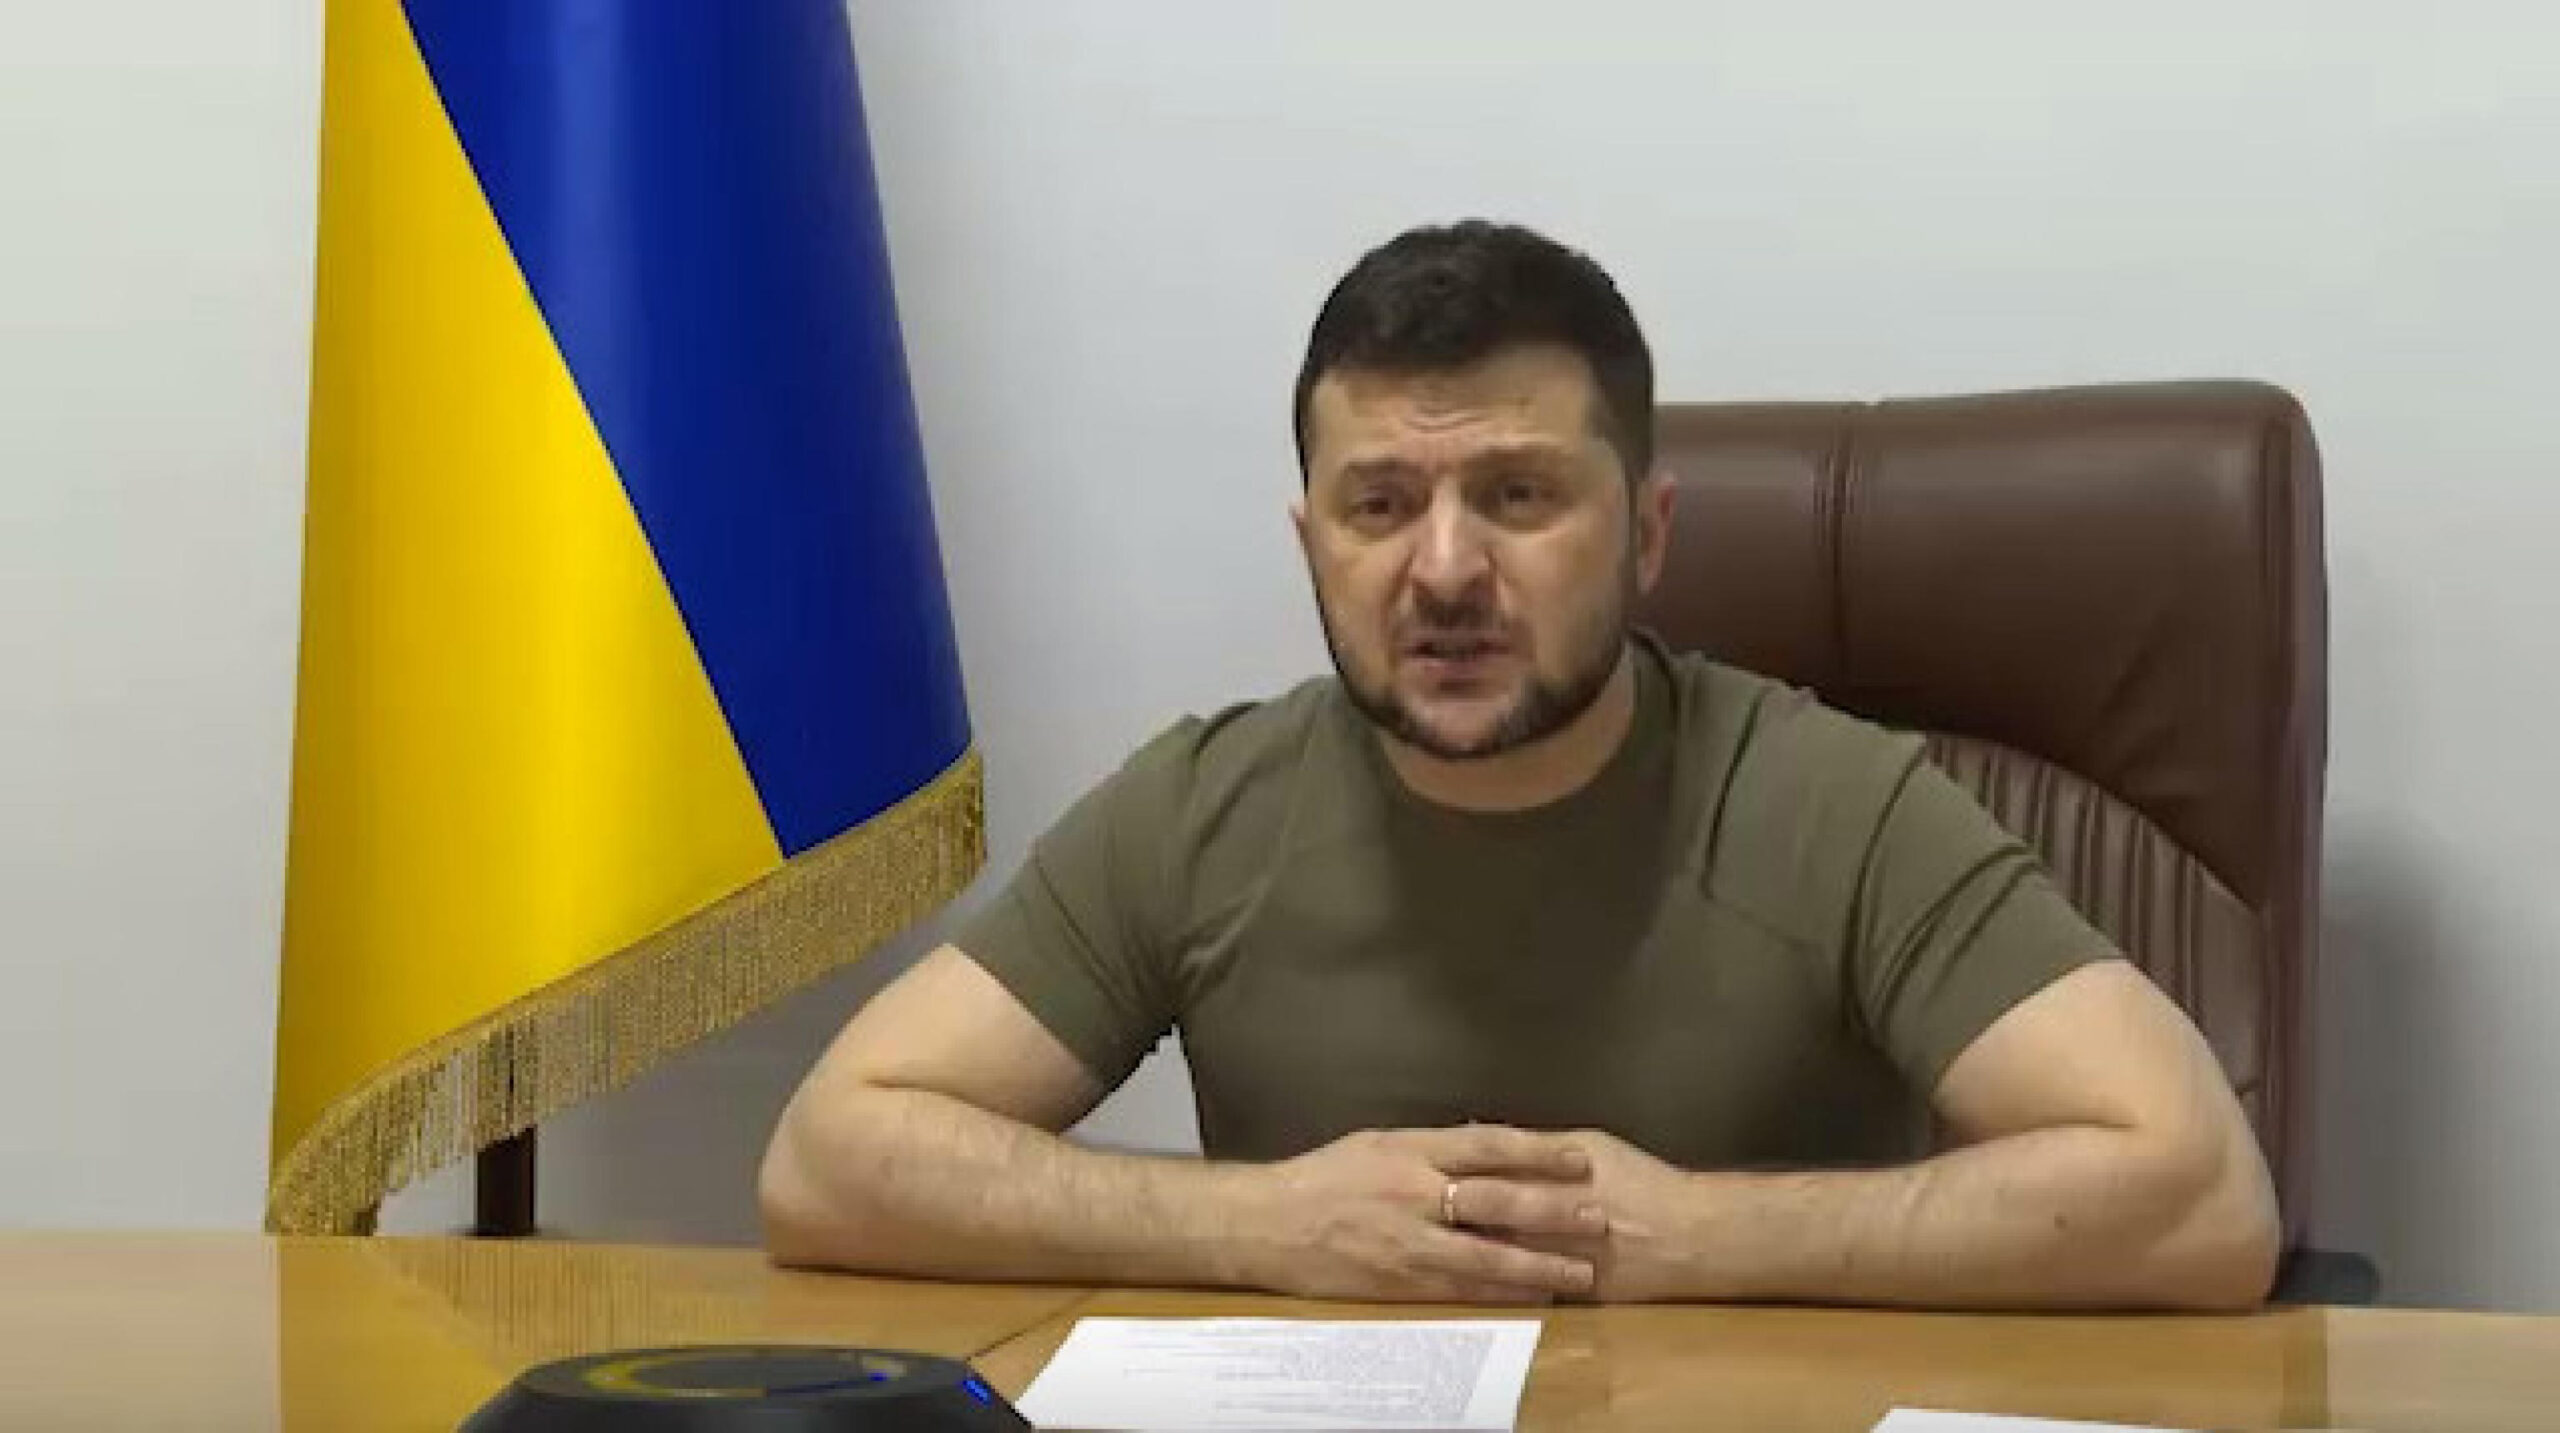 Ucraina sotto assedio. Zelensky: “la nostra integrità territoriale deve essere assicurata”